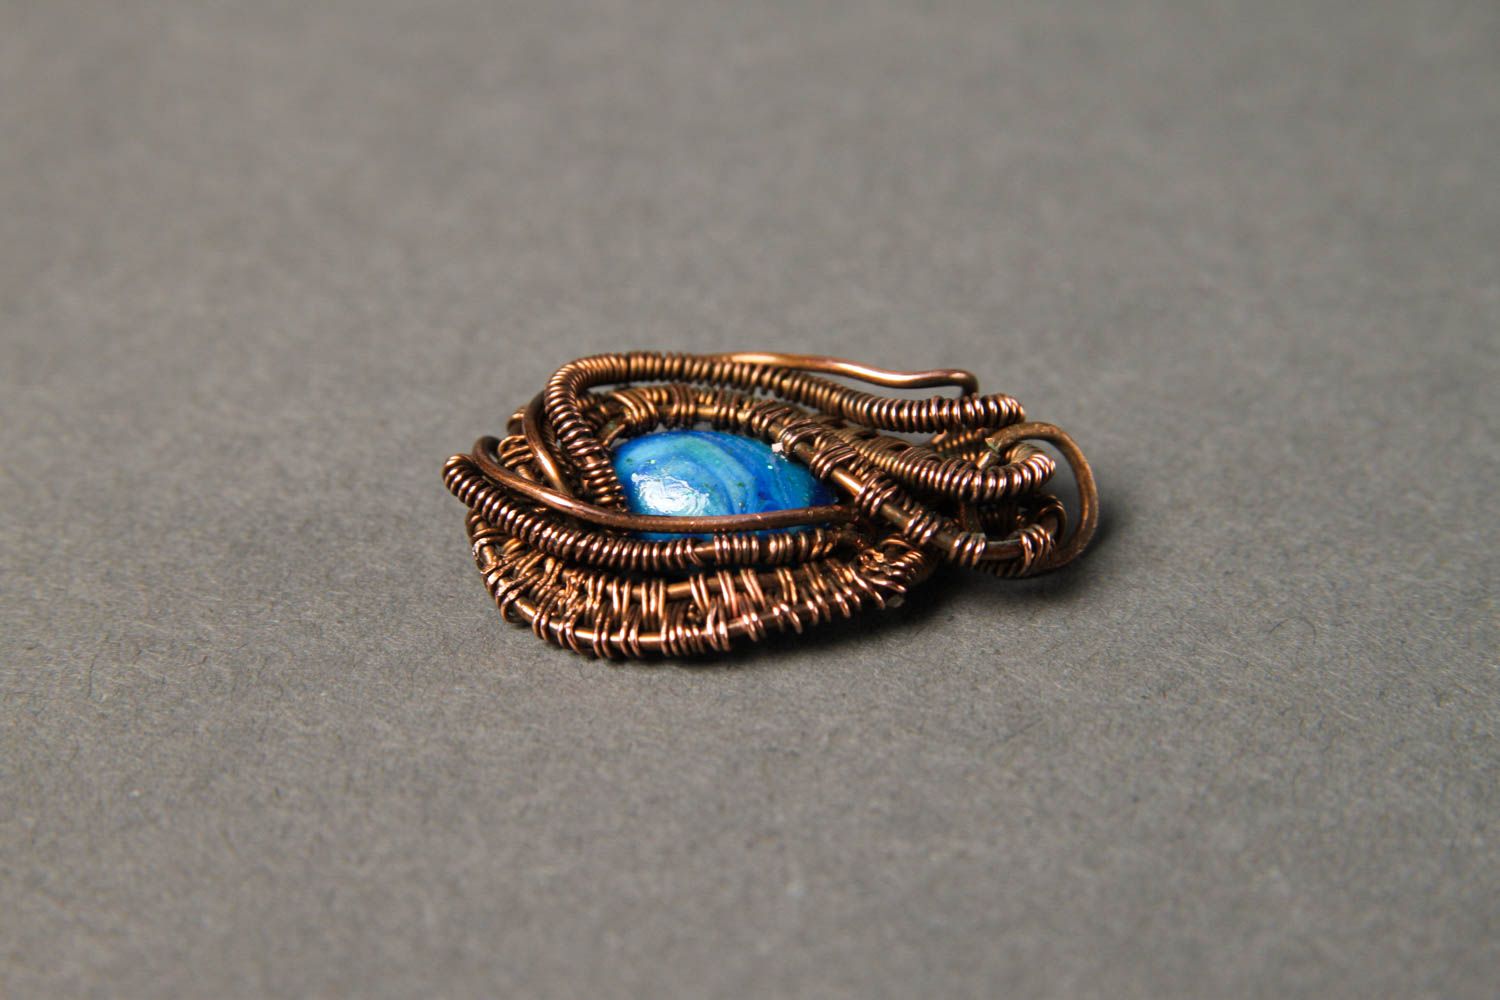 Unusual handmade metal pendant wire wrap ideas artisan jewelry designs photo 4